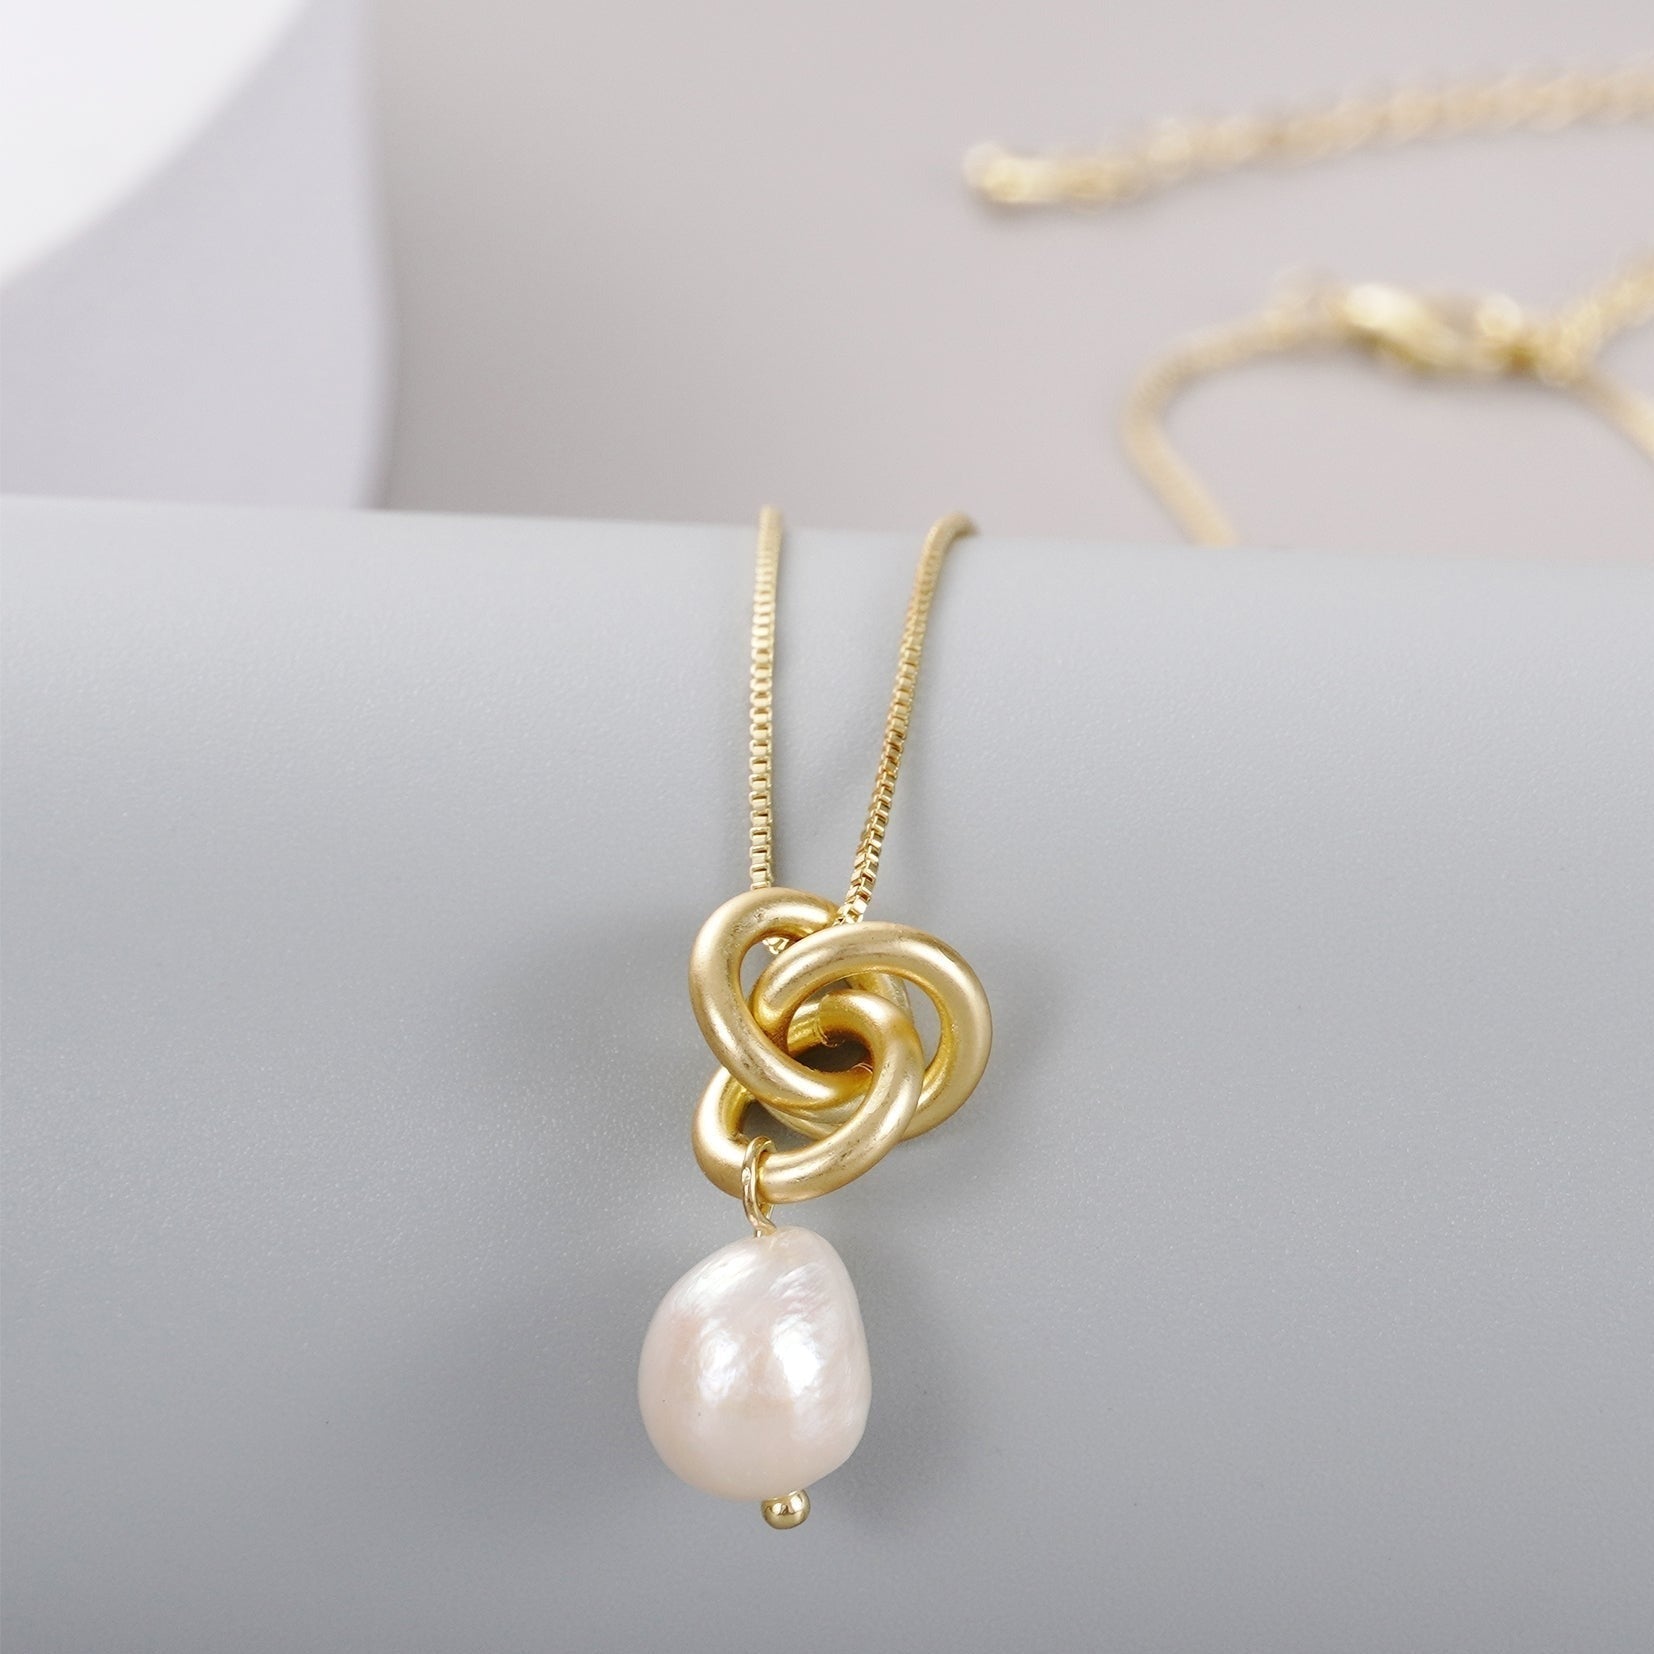 Gold Nest Necklace - The Nancy Smillie Shop - Art, Jewellery & Designer Gifts Glasgow